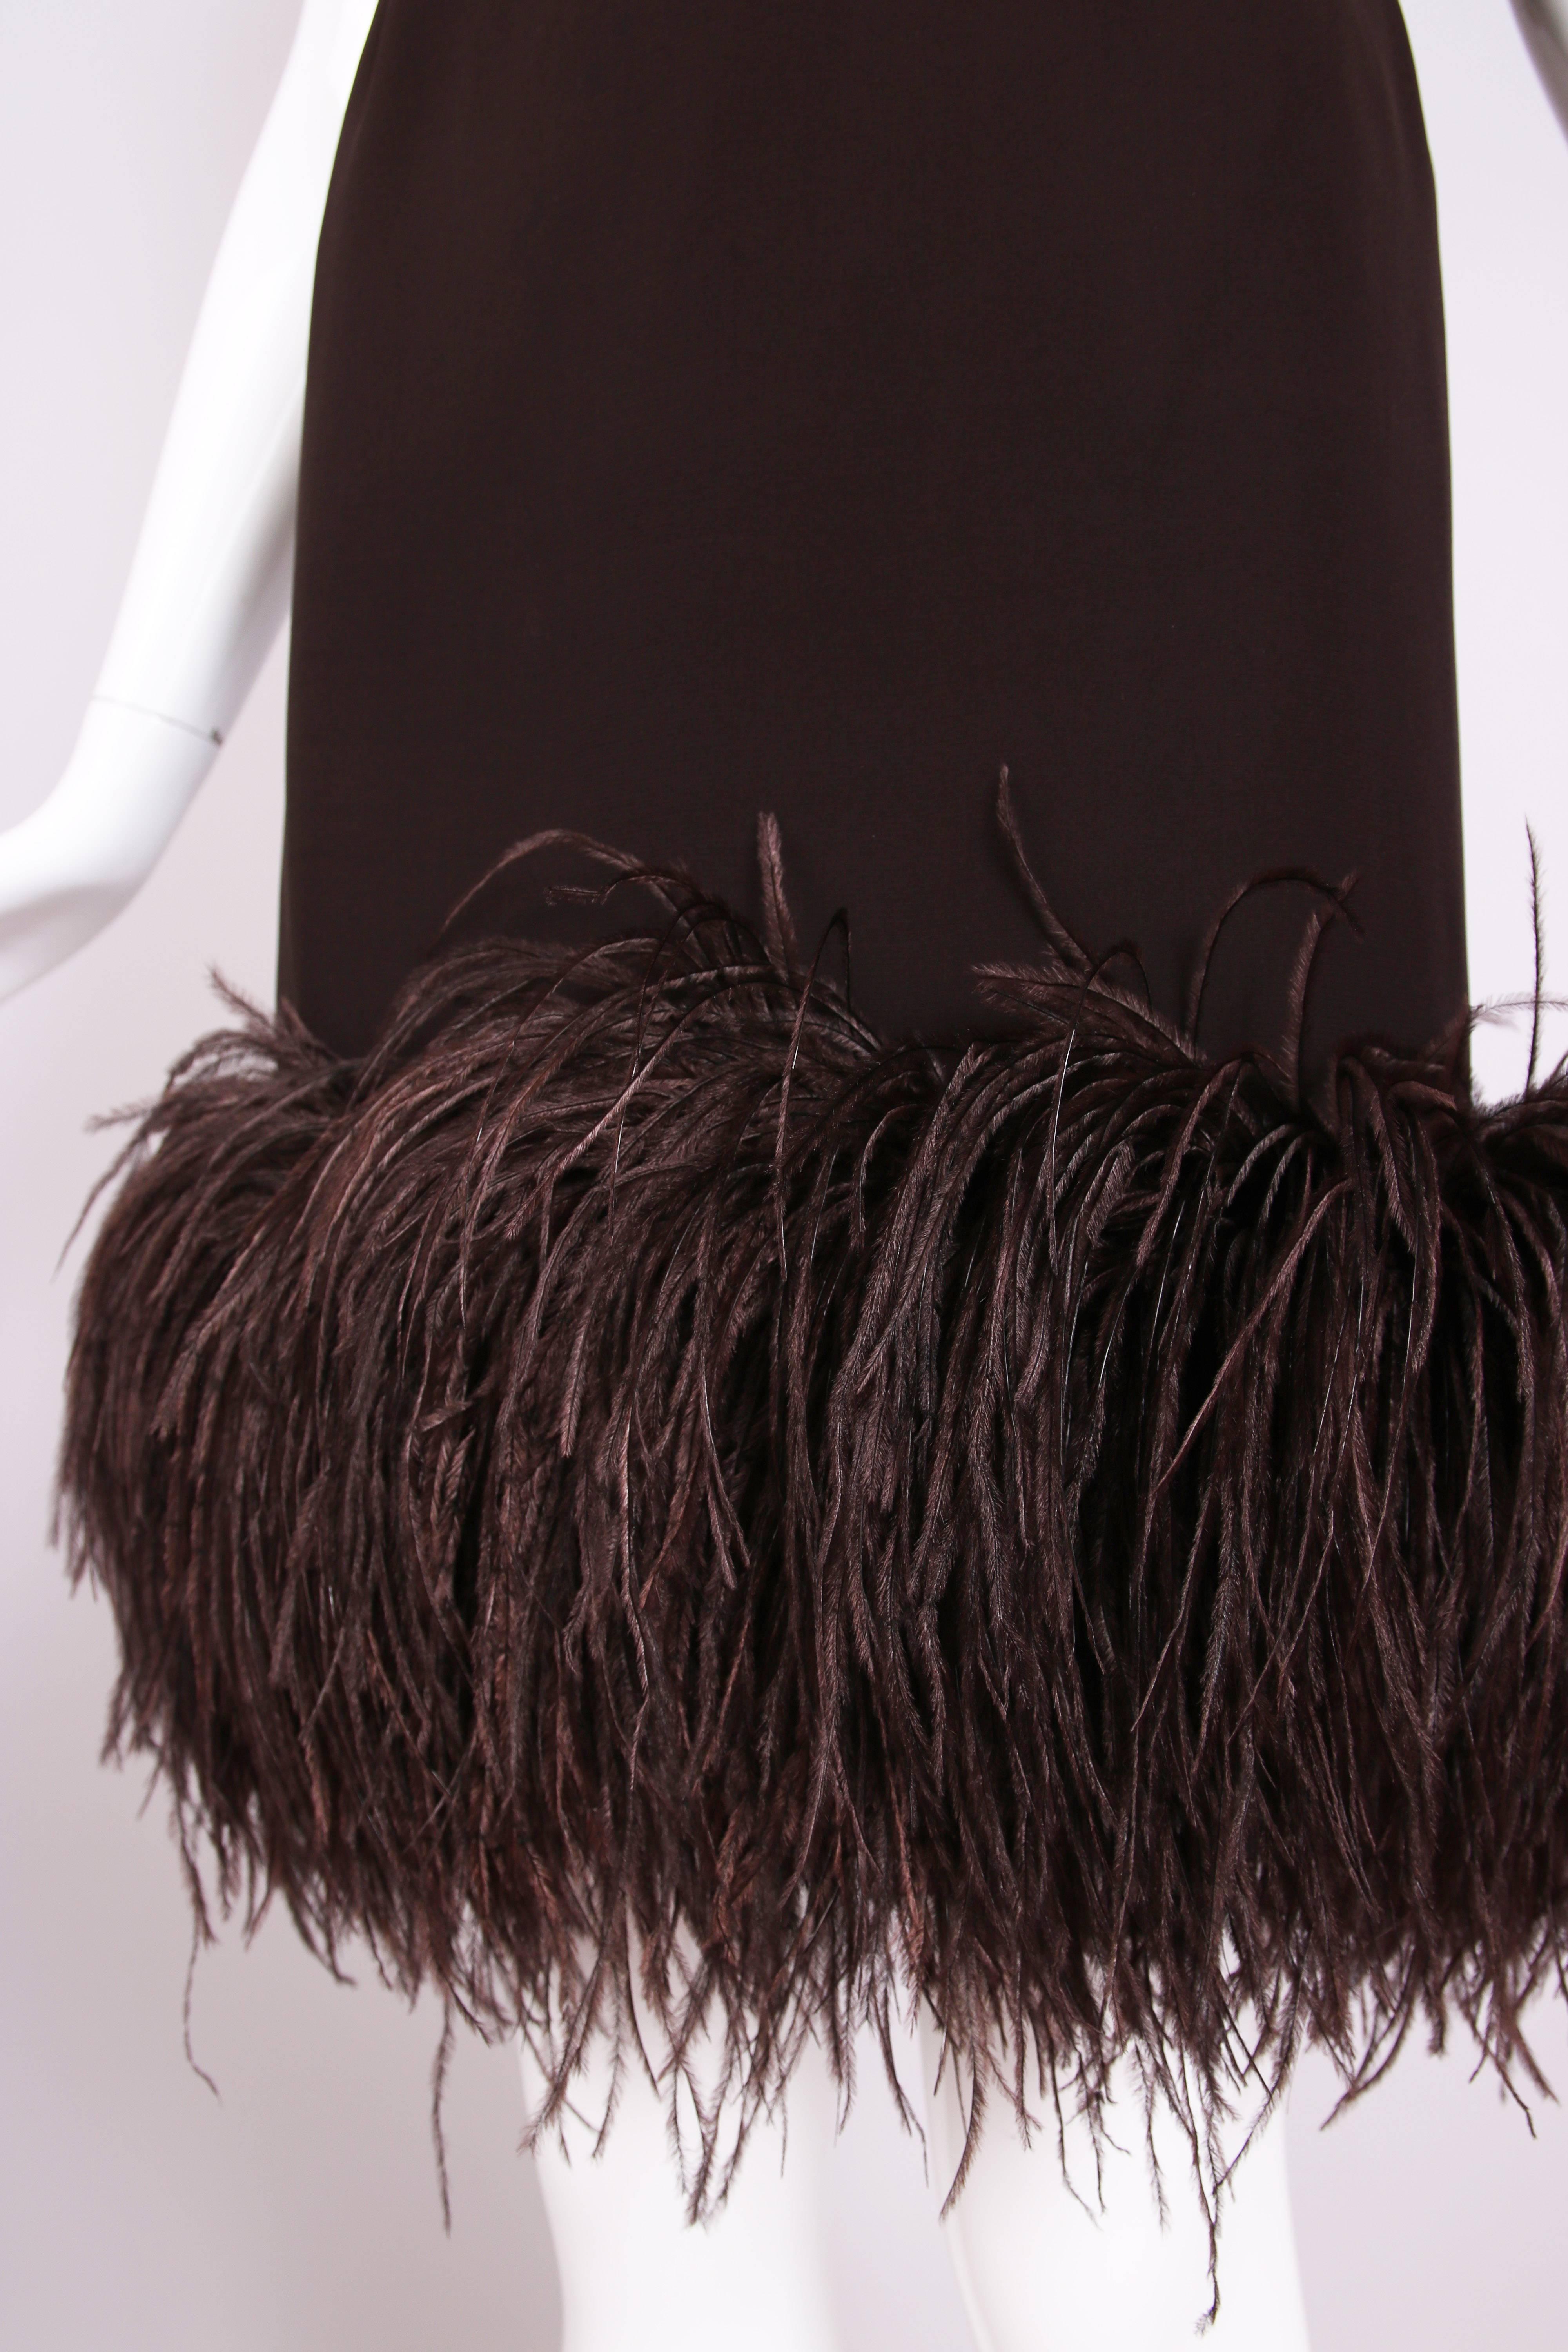 Black Pierre Cardin Brown Haute Couture Chiffon Cocktail Dress w/Ostrich Feather Trim